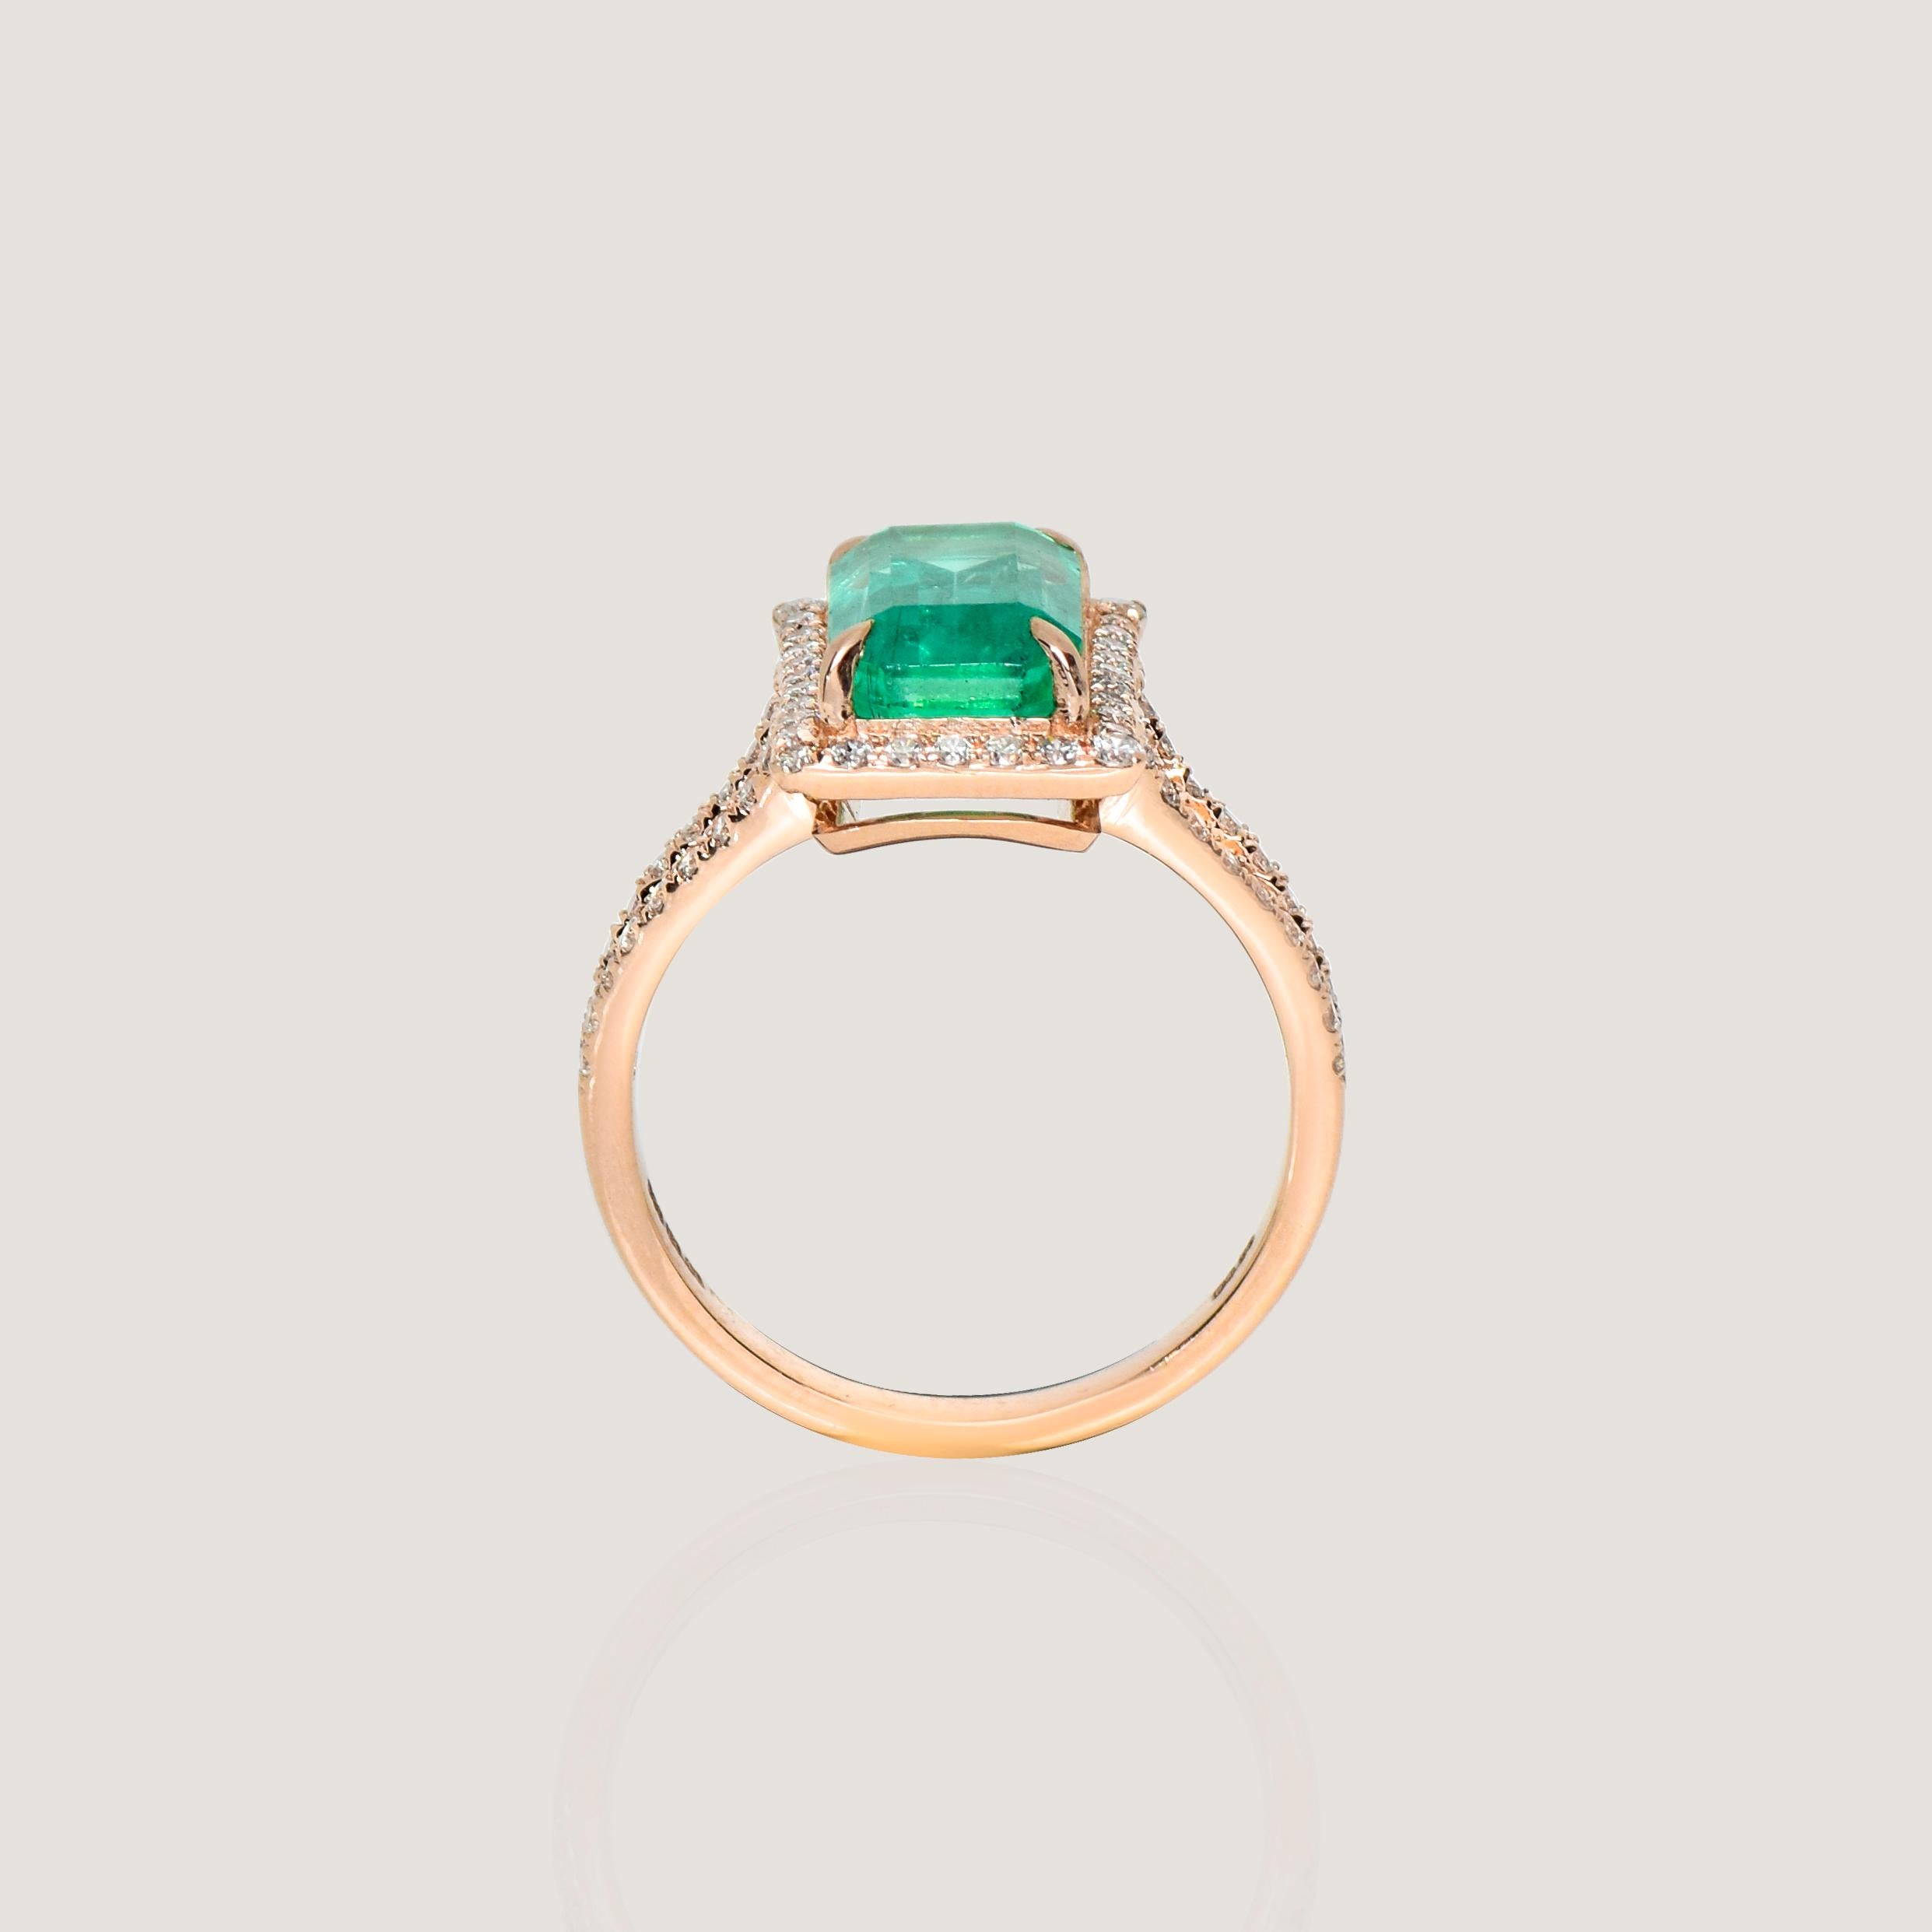 IGI 14k 3.03 Carat Natural Emerald & Diamond Antique Art Deco Engagement Ring For Sale 1